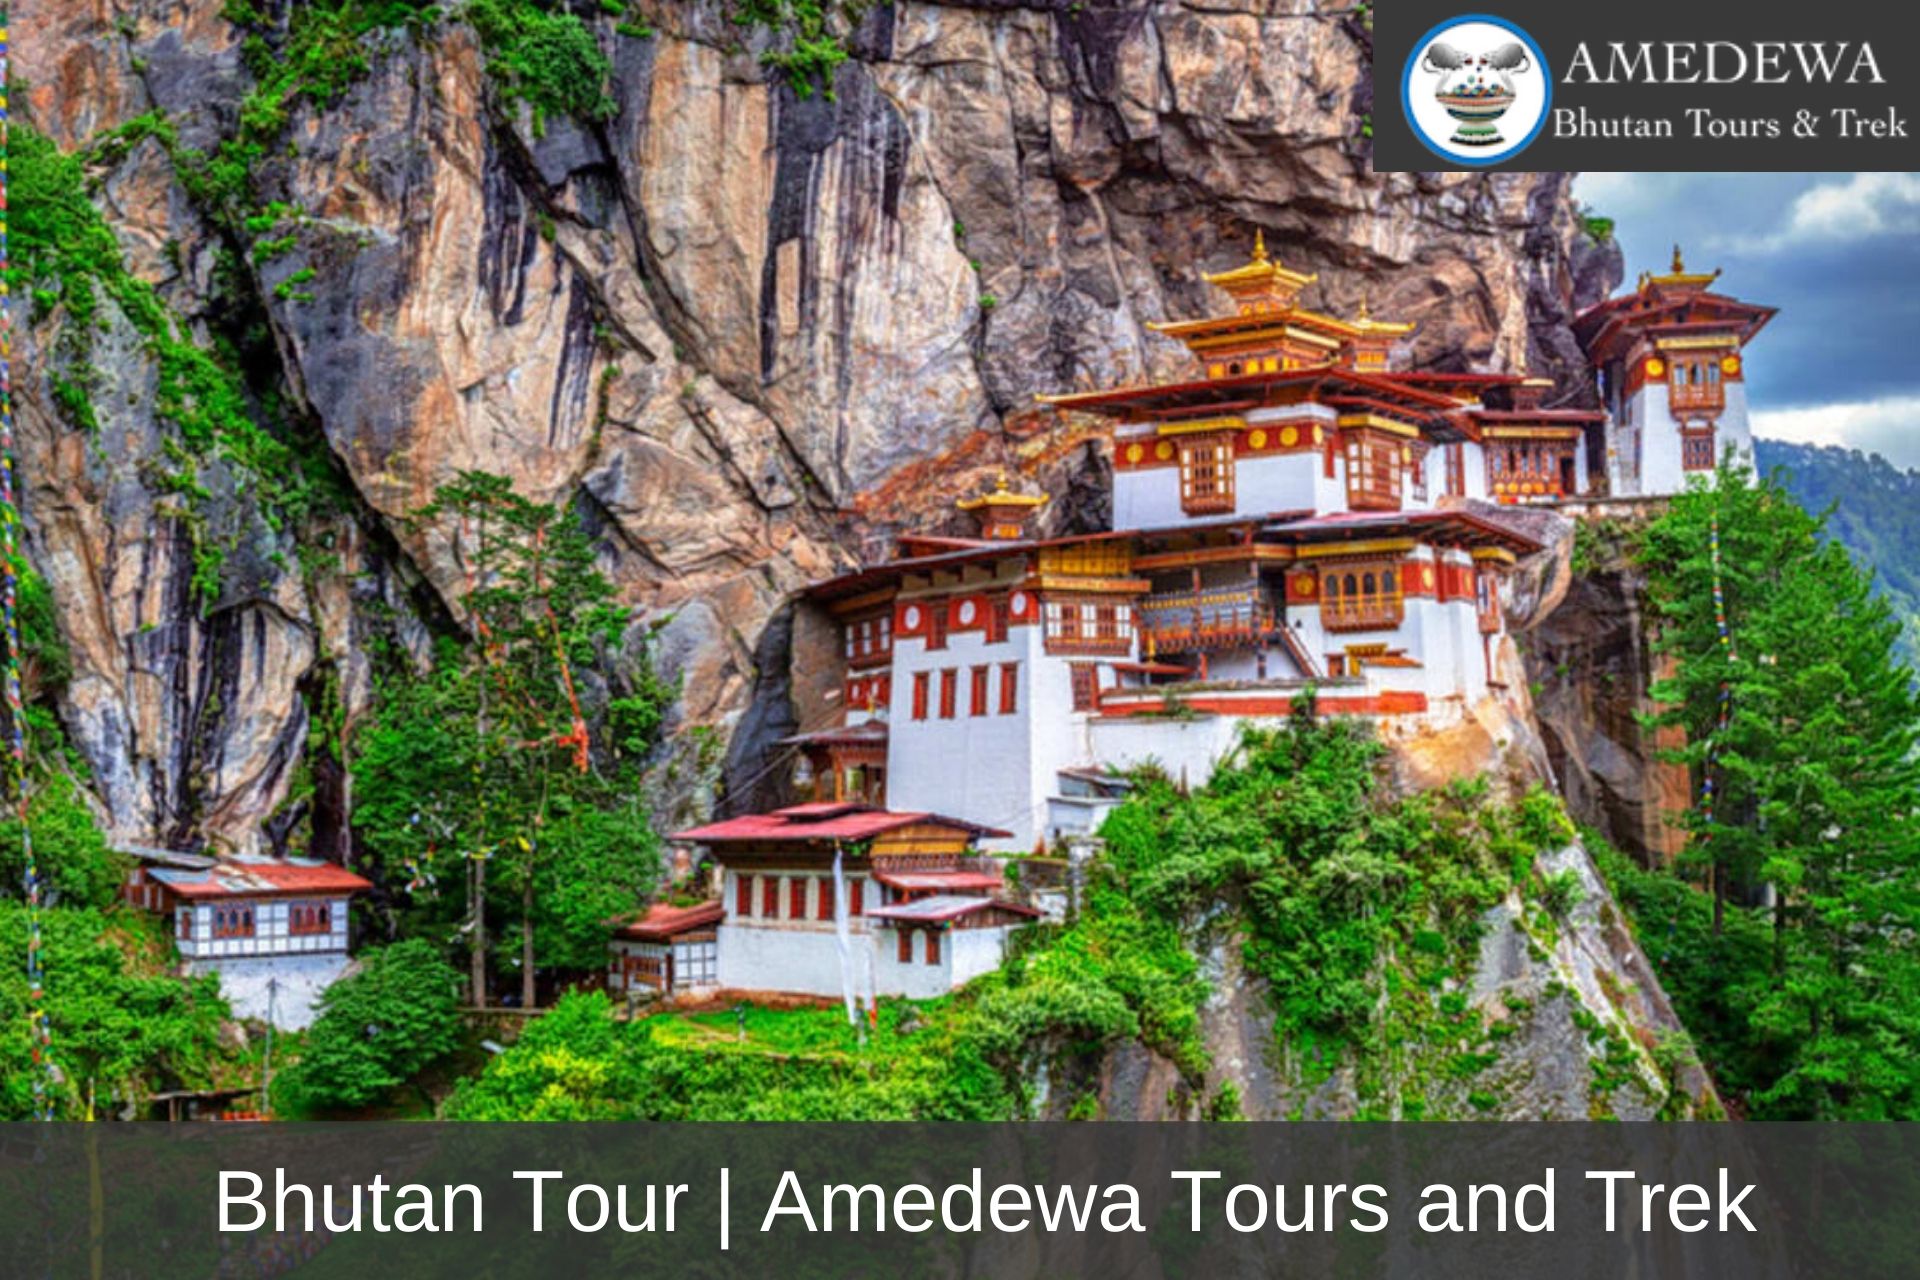 Bhutan Tour - Amedewa Tours and Trek